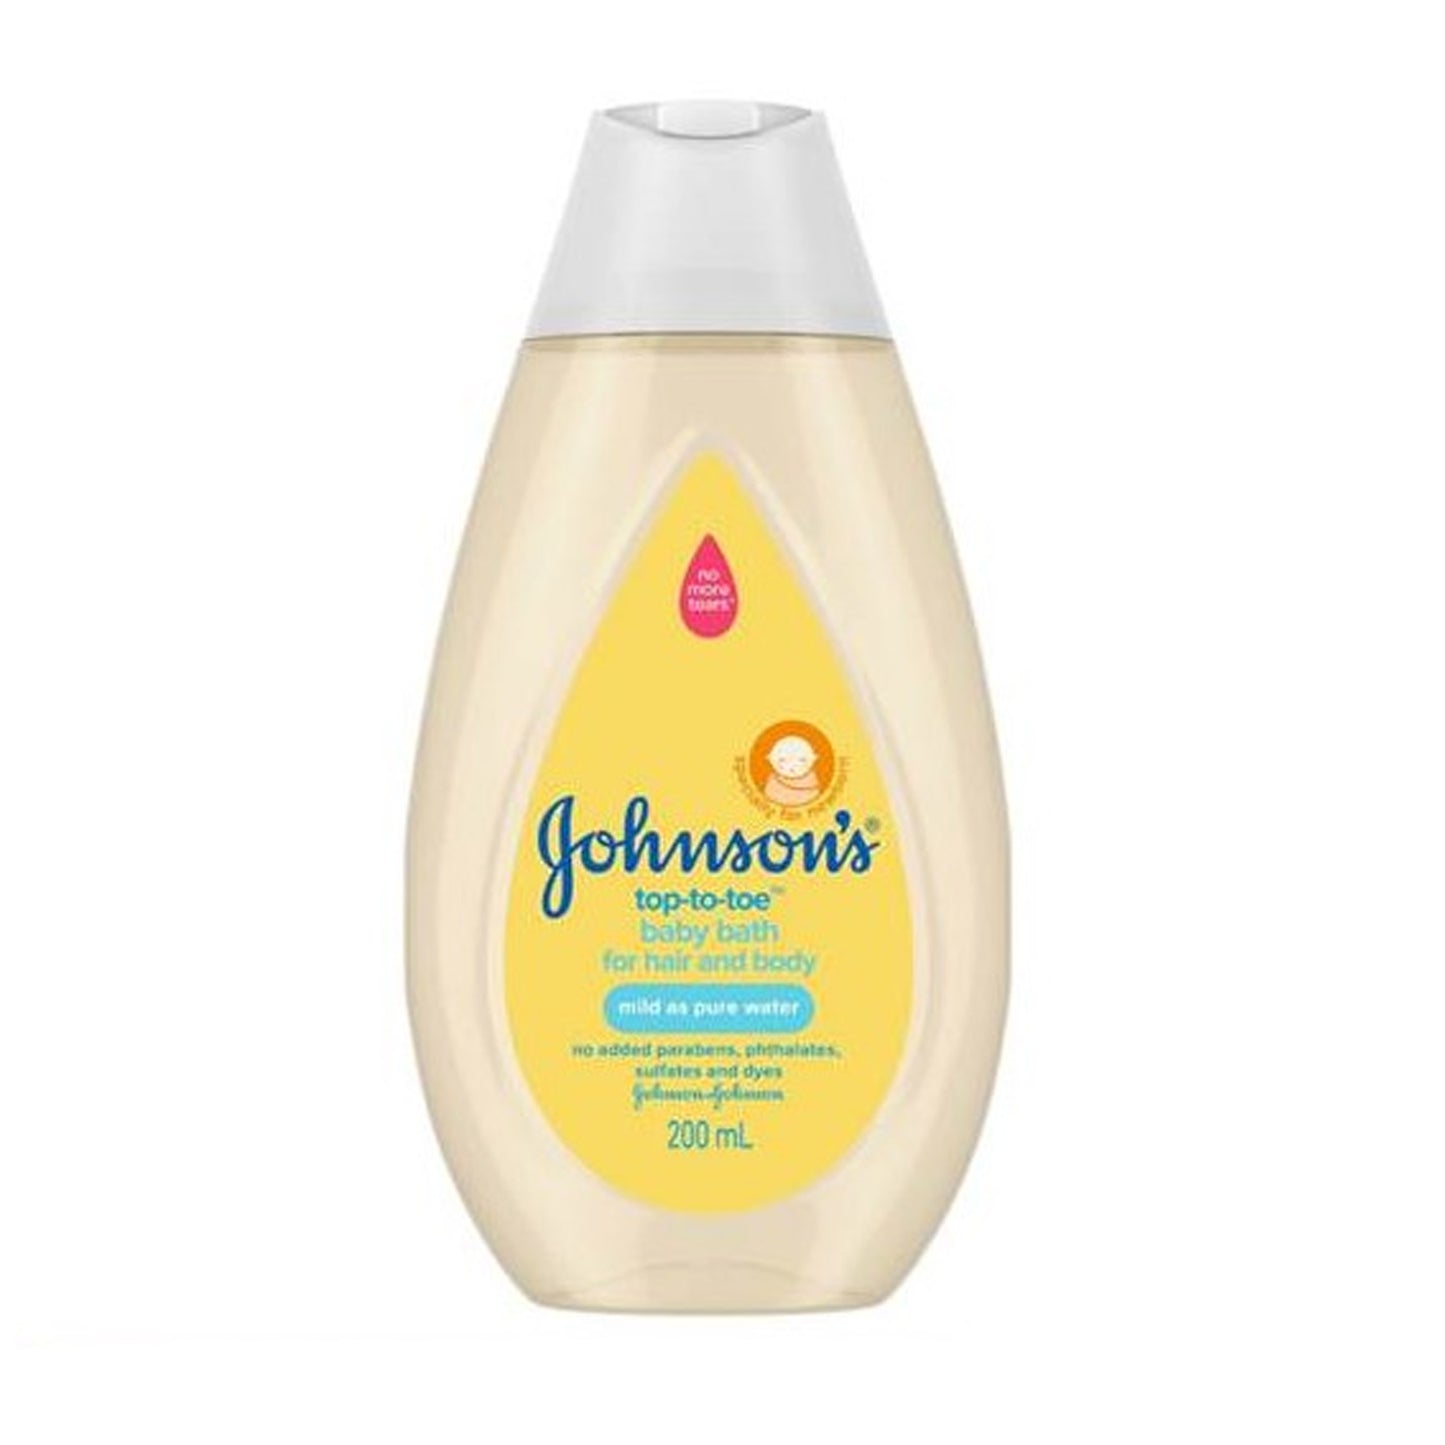 JOHNSON'S - TOP-TO-TOE HAIR & BODY BABY BATH - 200ML